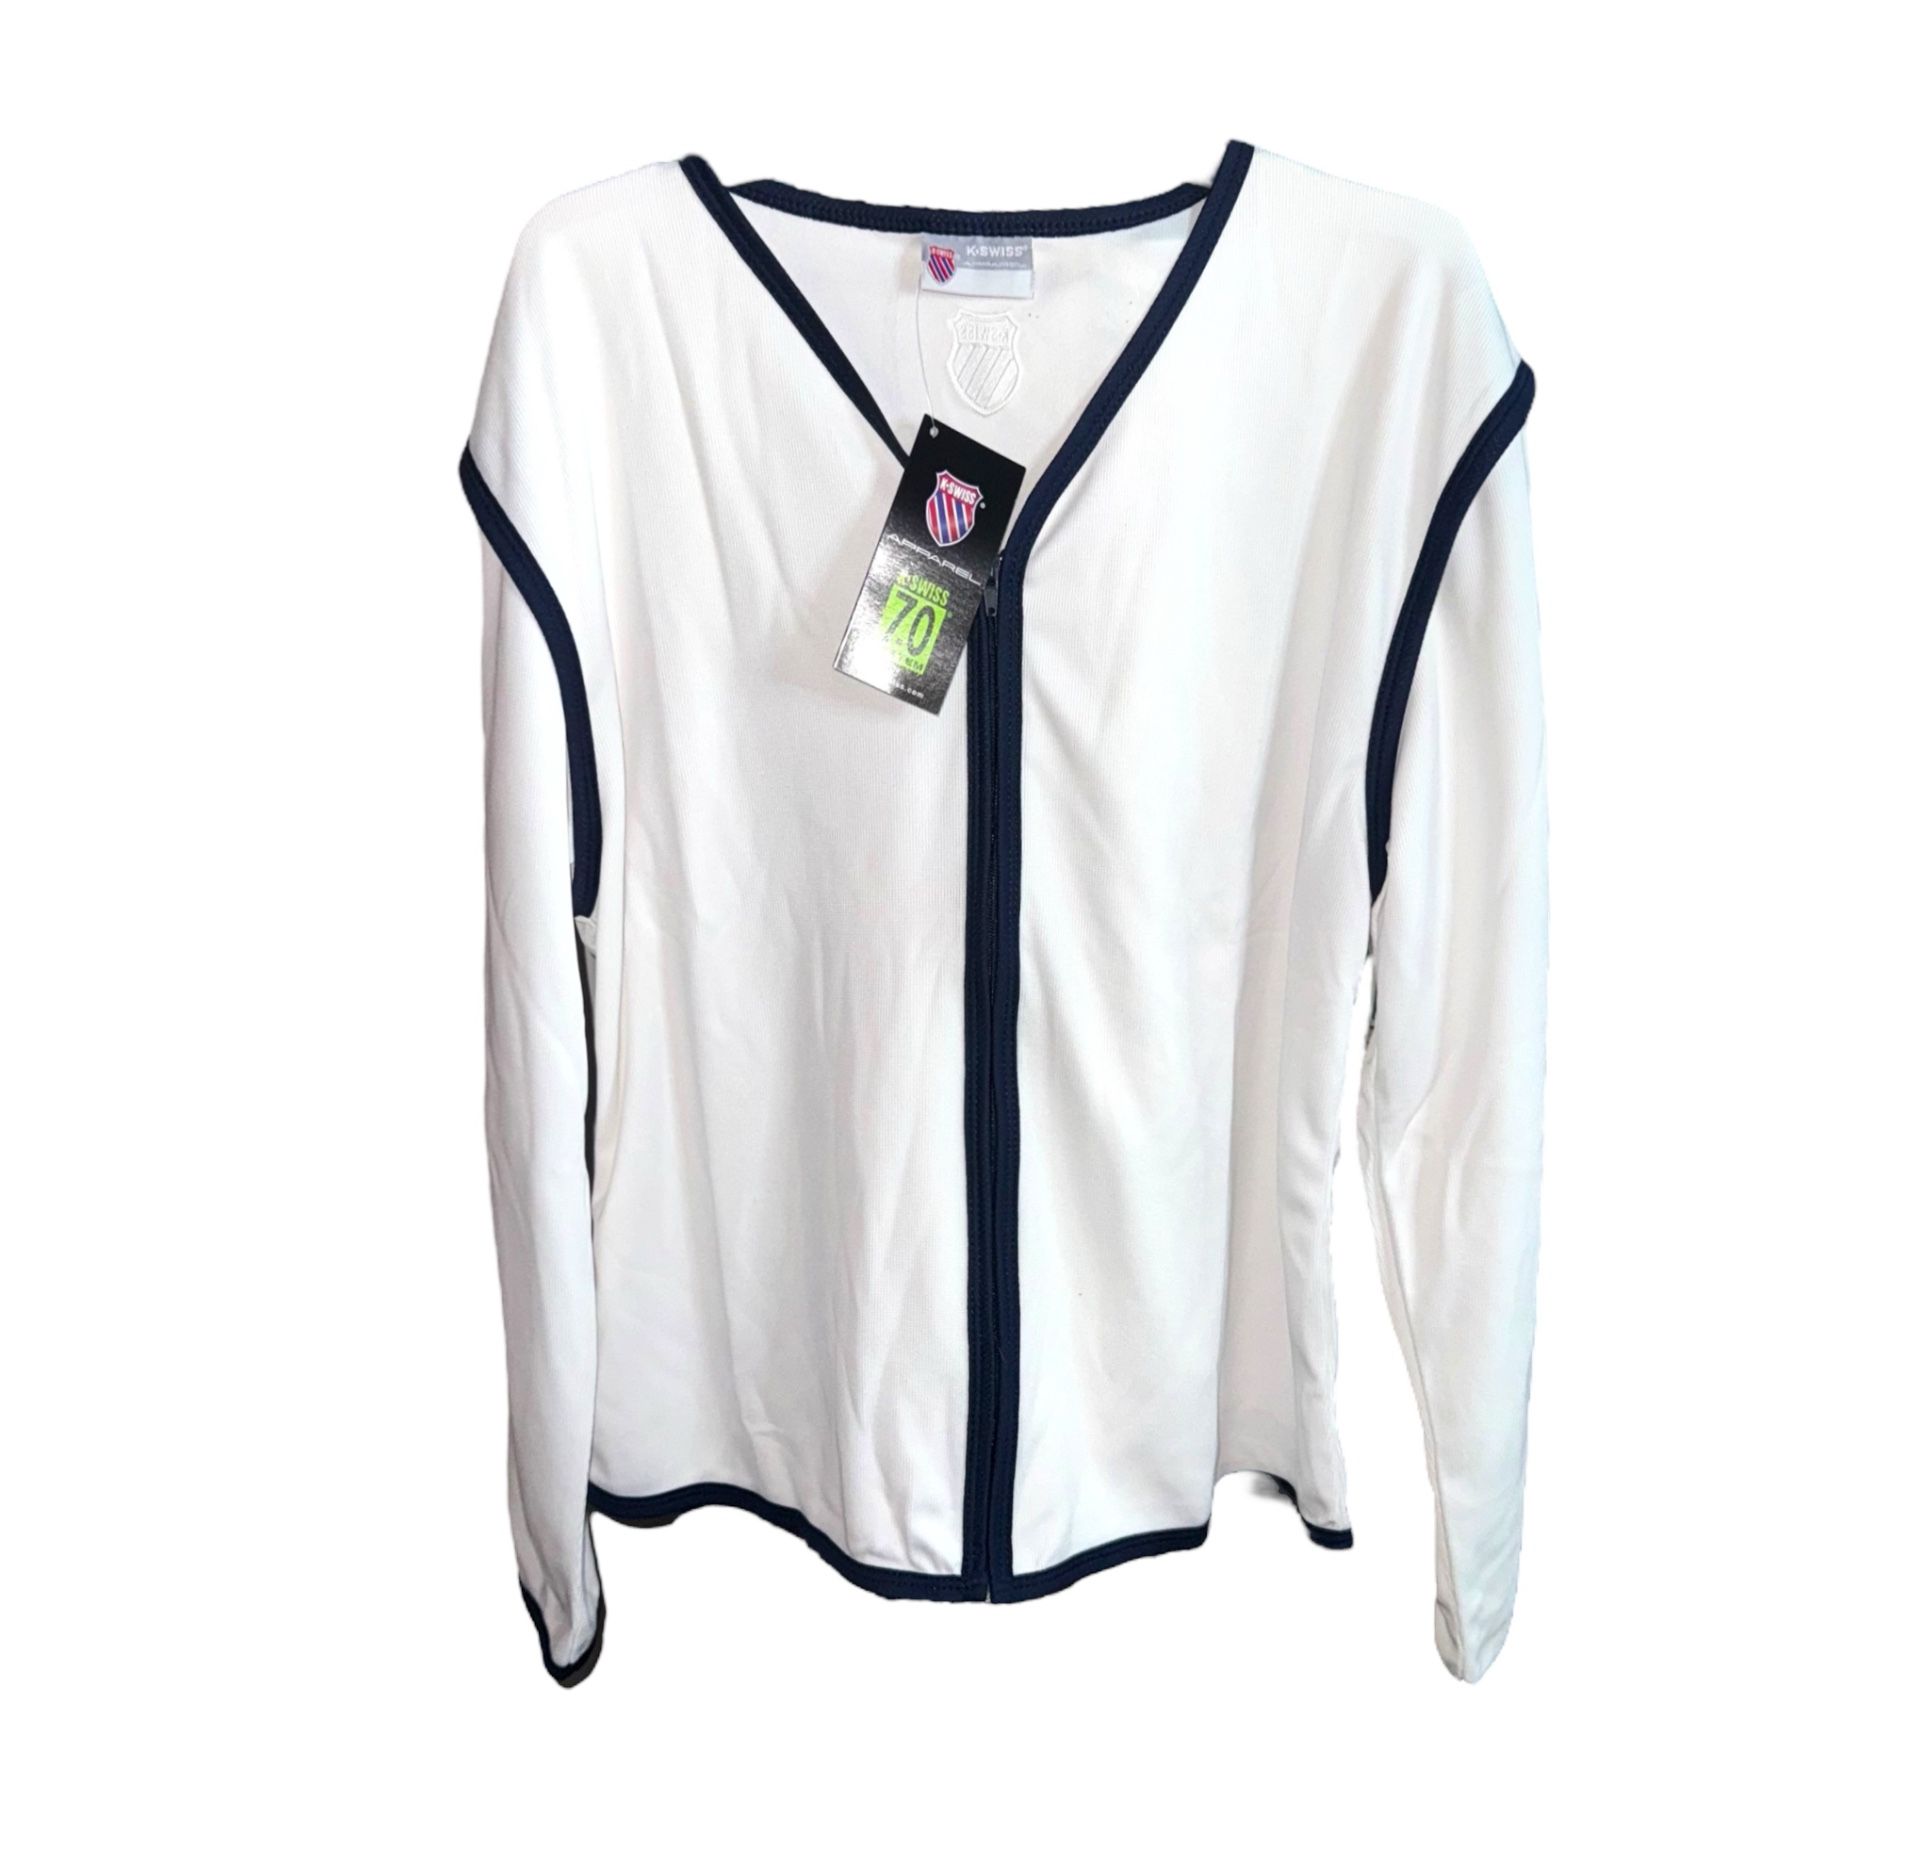 K-Swiss Apparel Womens Top Shirt Athletic  Glaciator Cardigan White/Navy Zipper Long Sleeve Size Large  